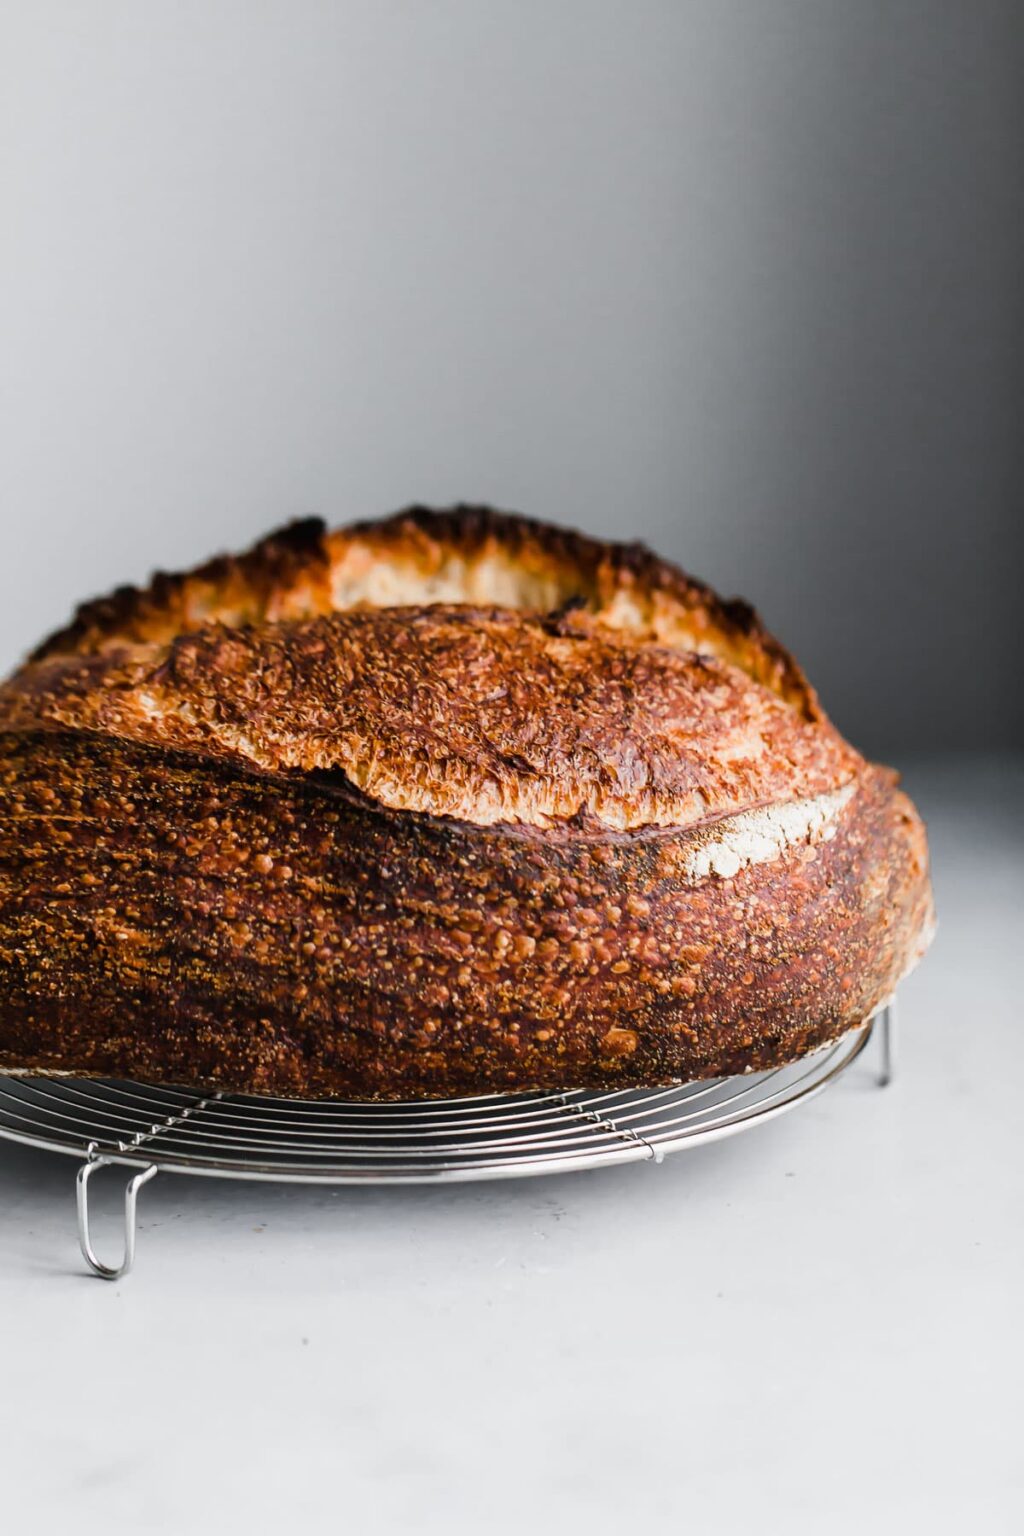 Artisan Sourdough Bread Recipe (with Video!) - A Beautiful Plate